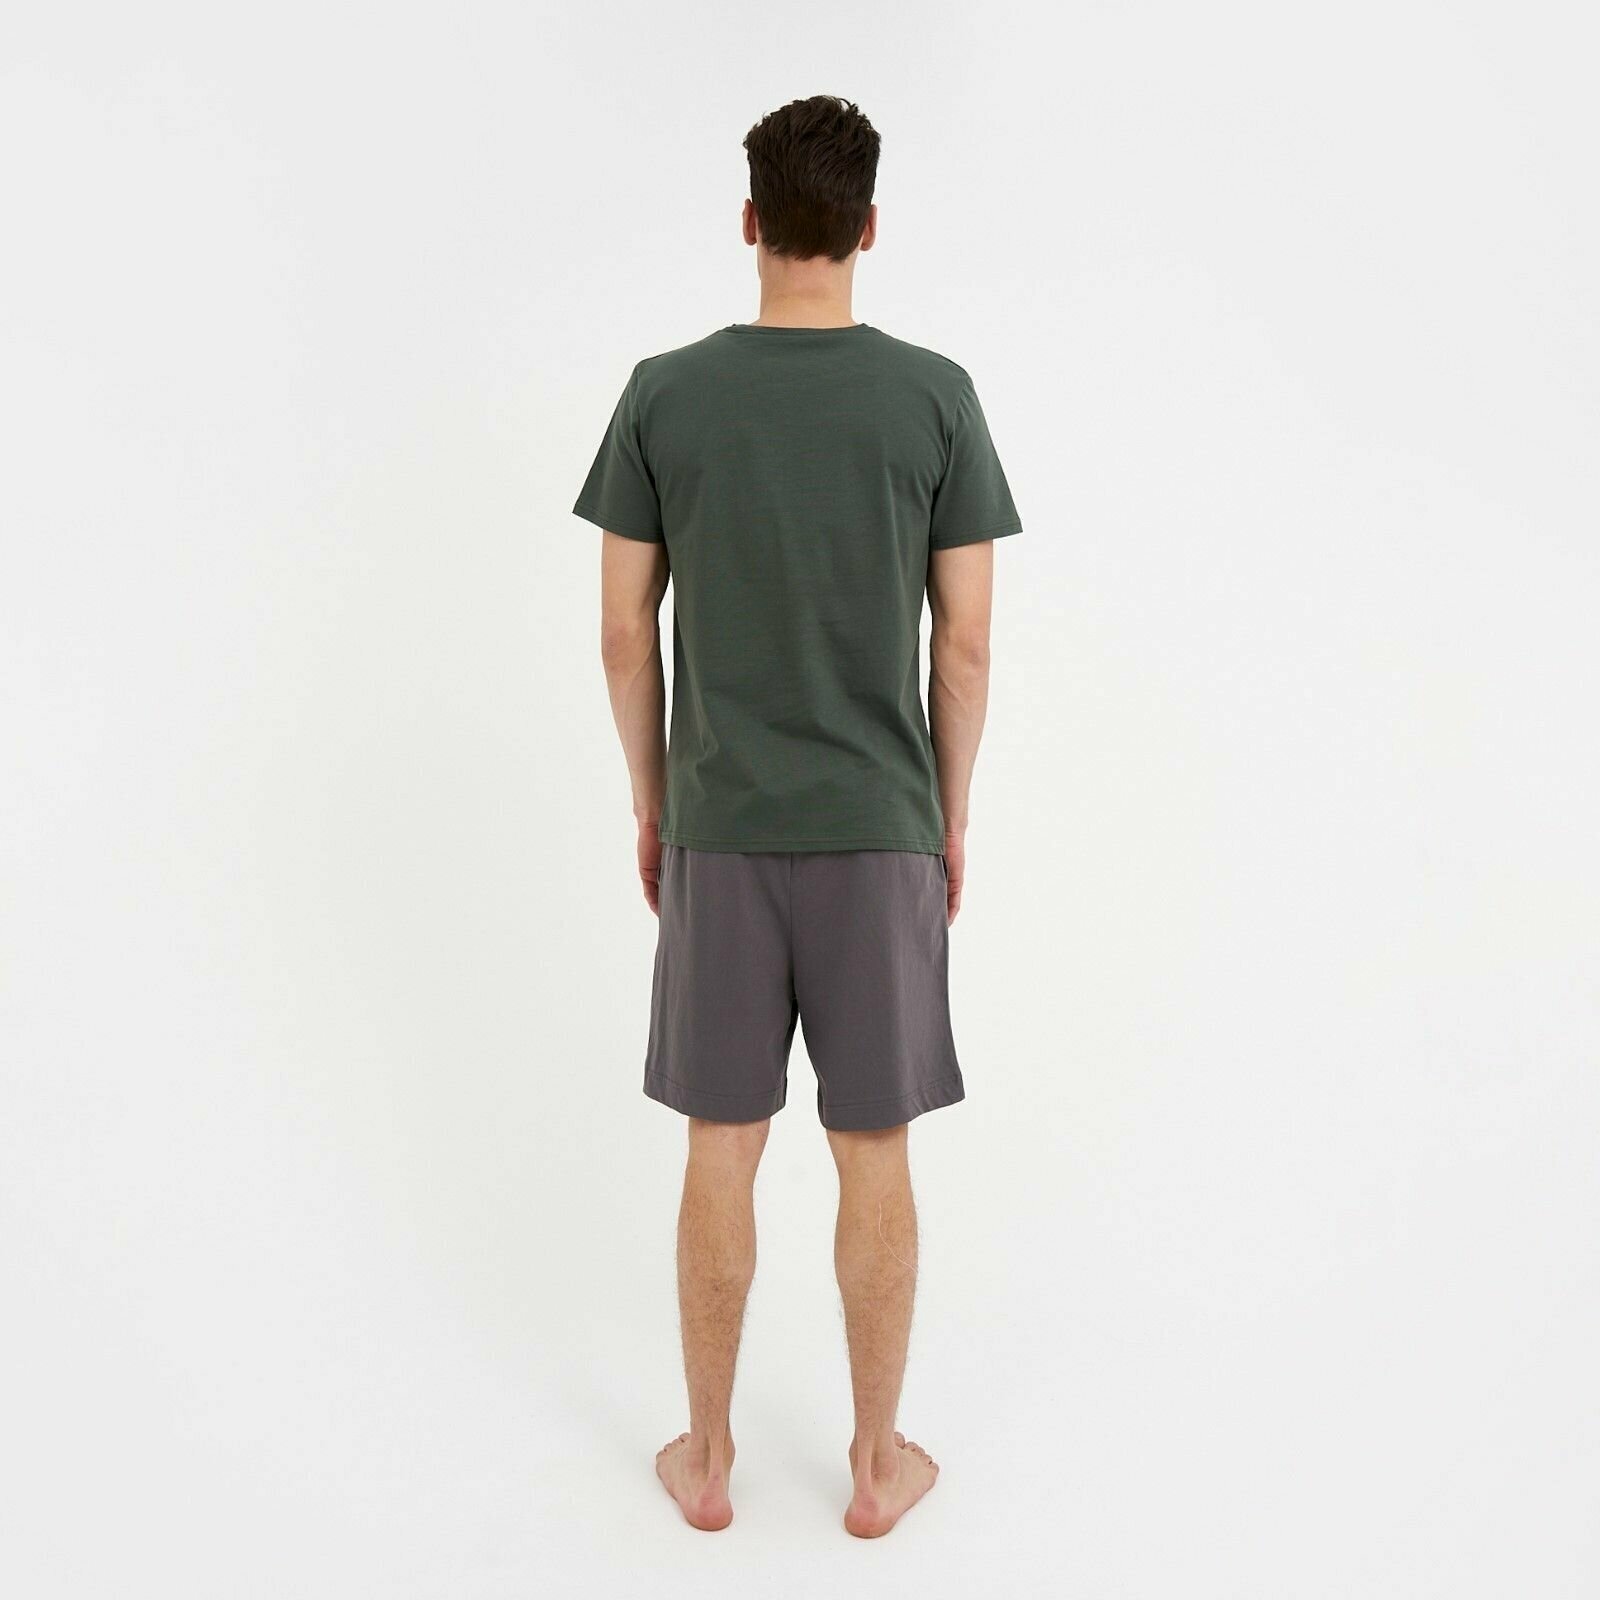 Пижама Kaftan, футболка, шорты, размер 54, зеленый - фотография № 5